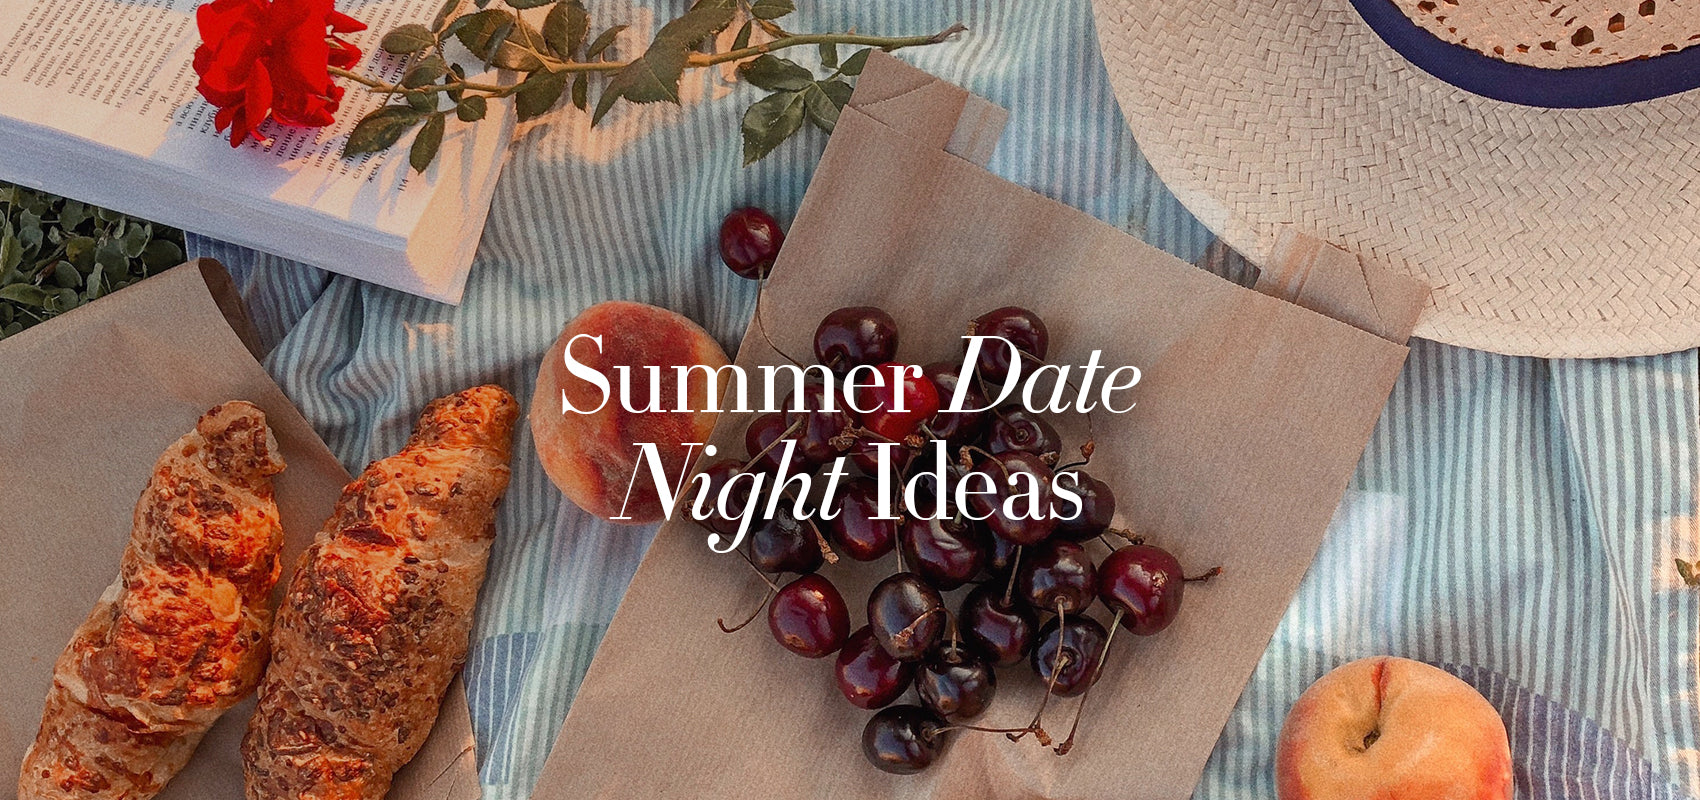 Summer Date Night Ideas